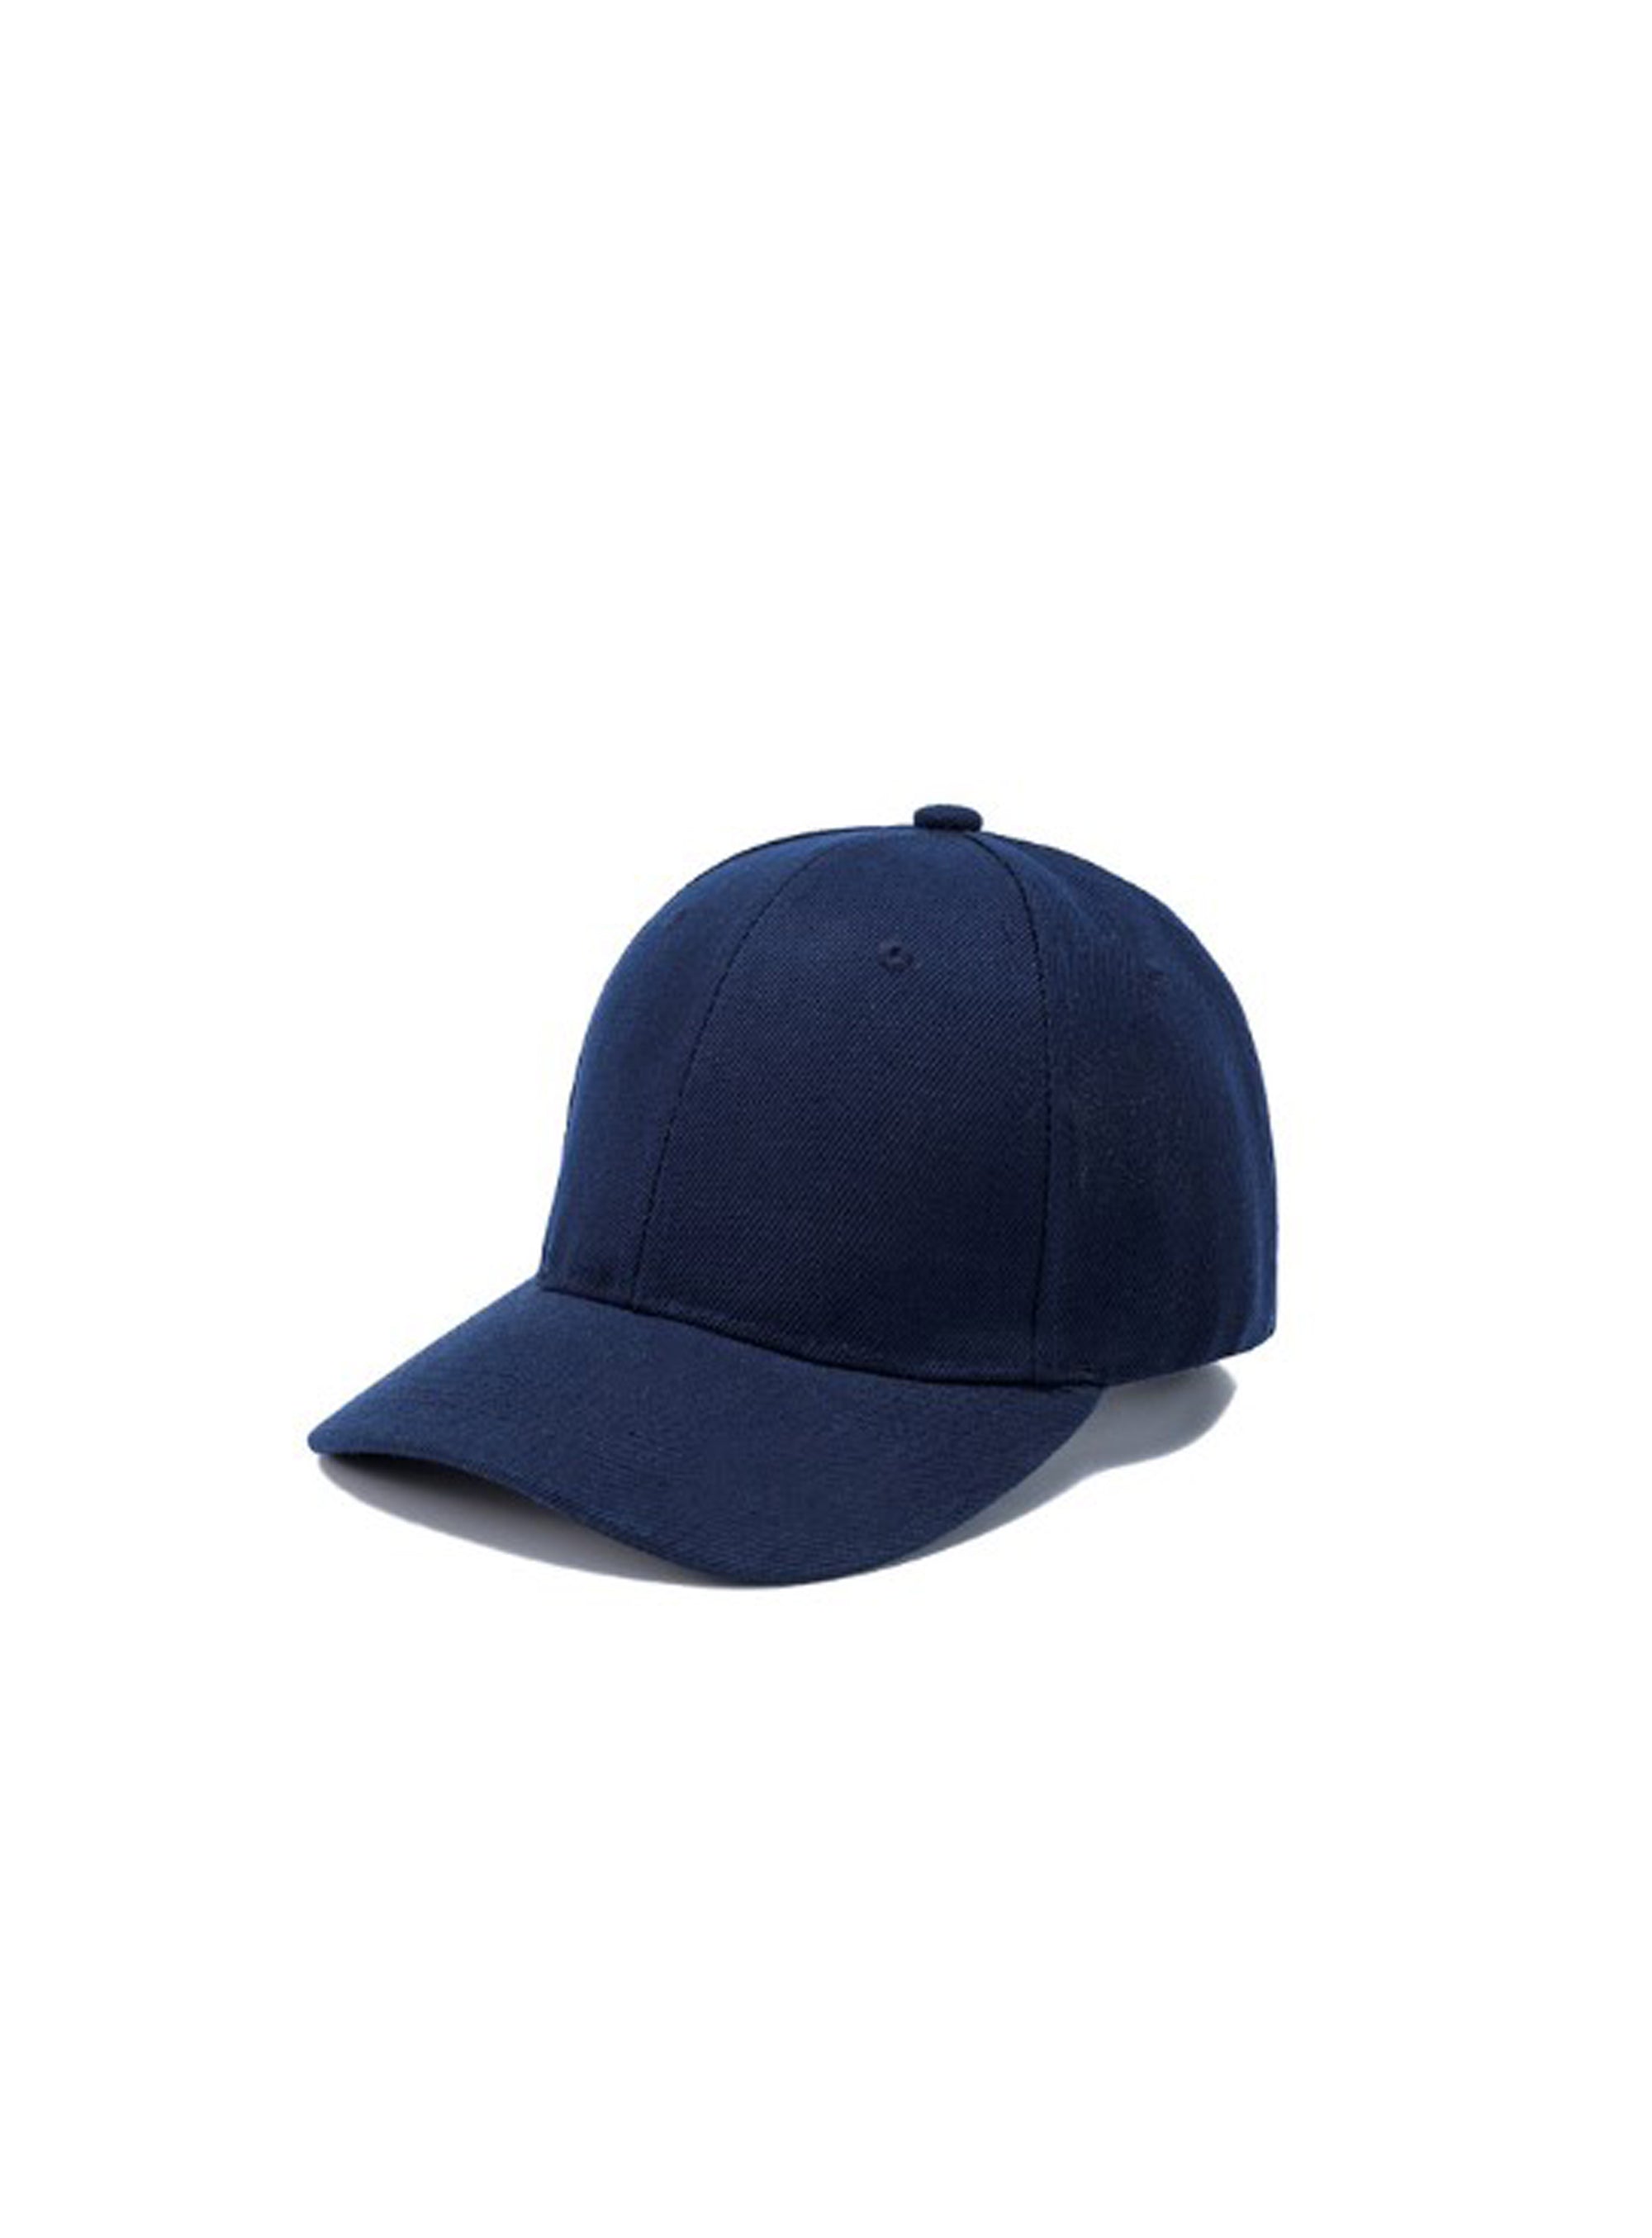 cobalt blue cap with adjustable strap